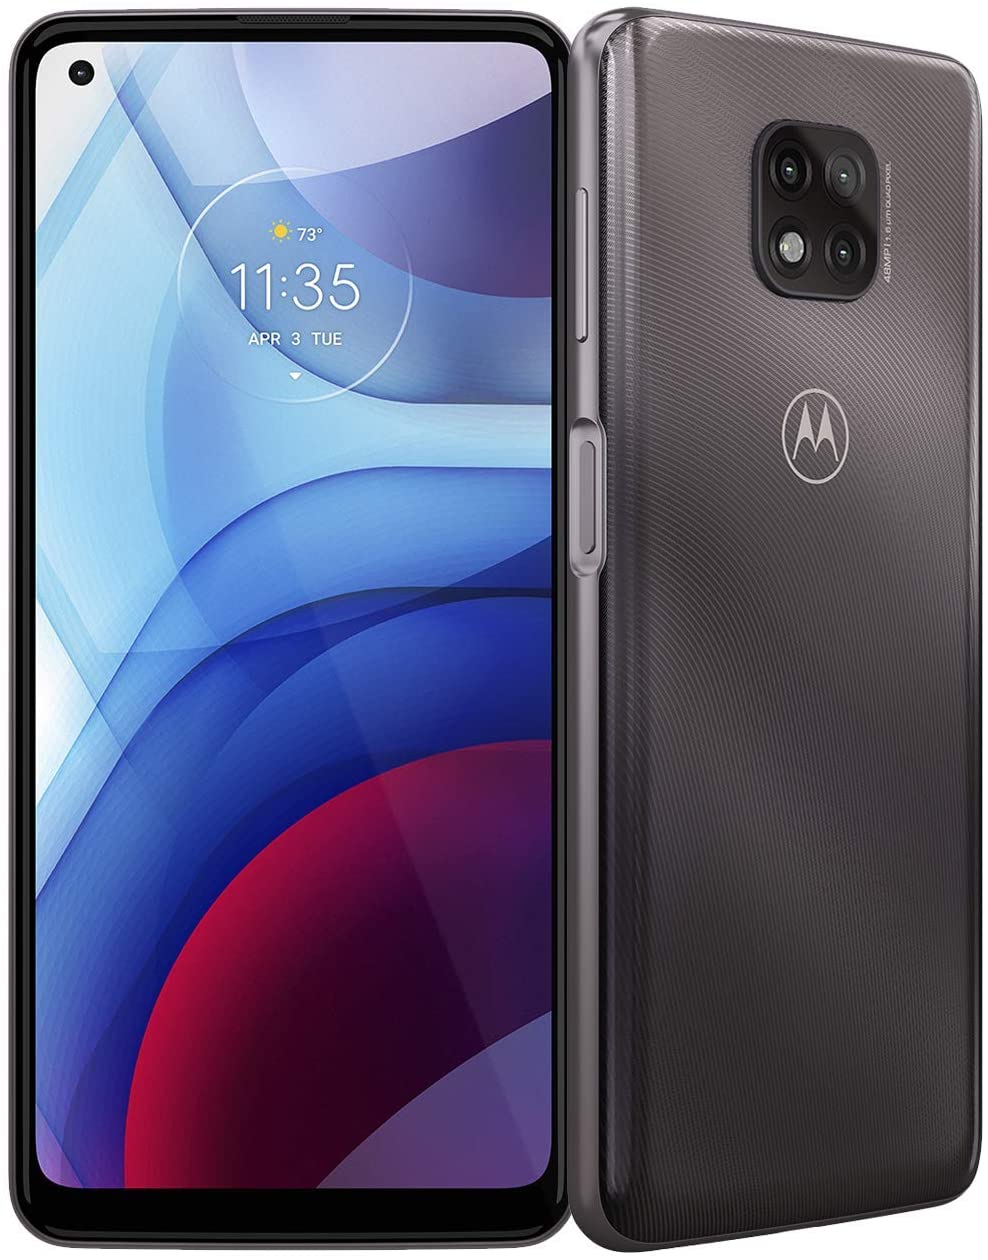 The Motorola Moto G Power (2021), Phones with longest battery life